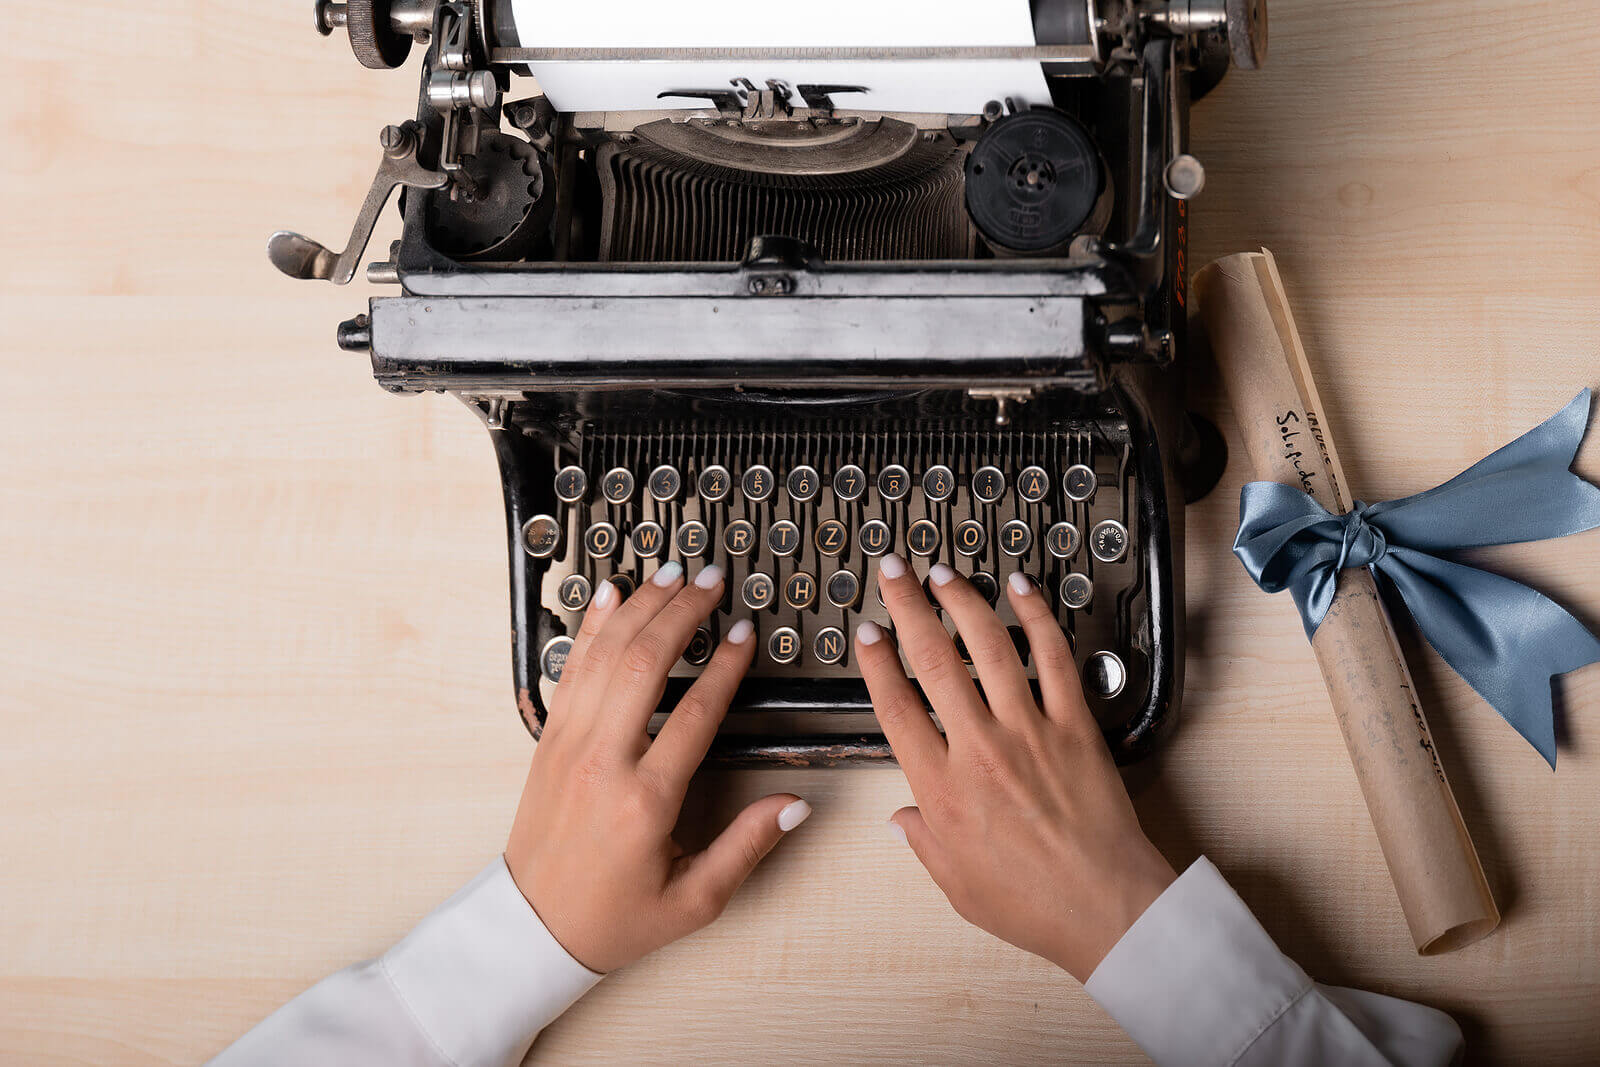 A lady types on a typwriter.